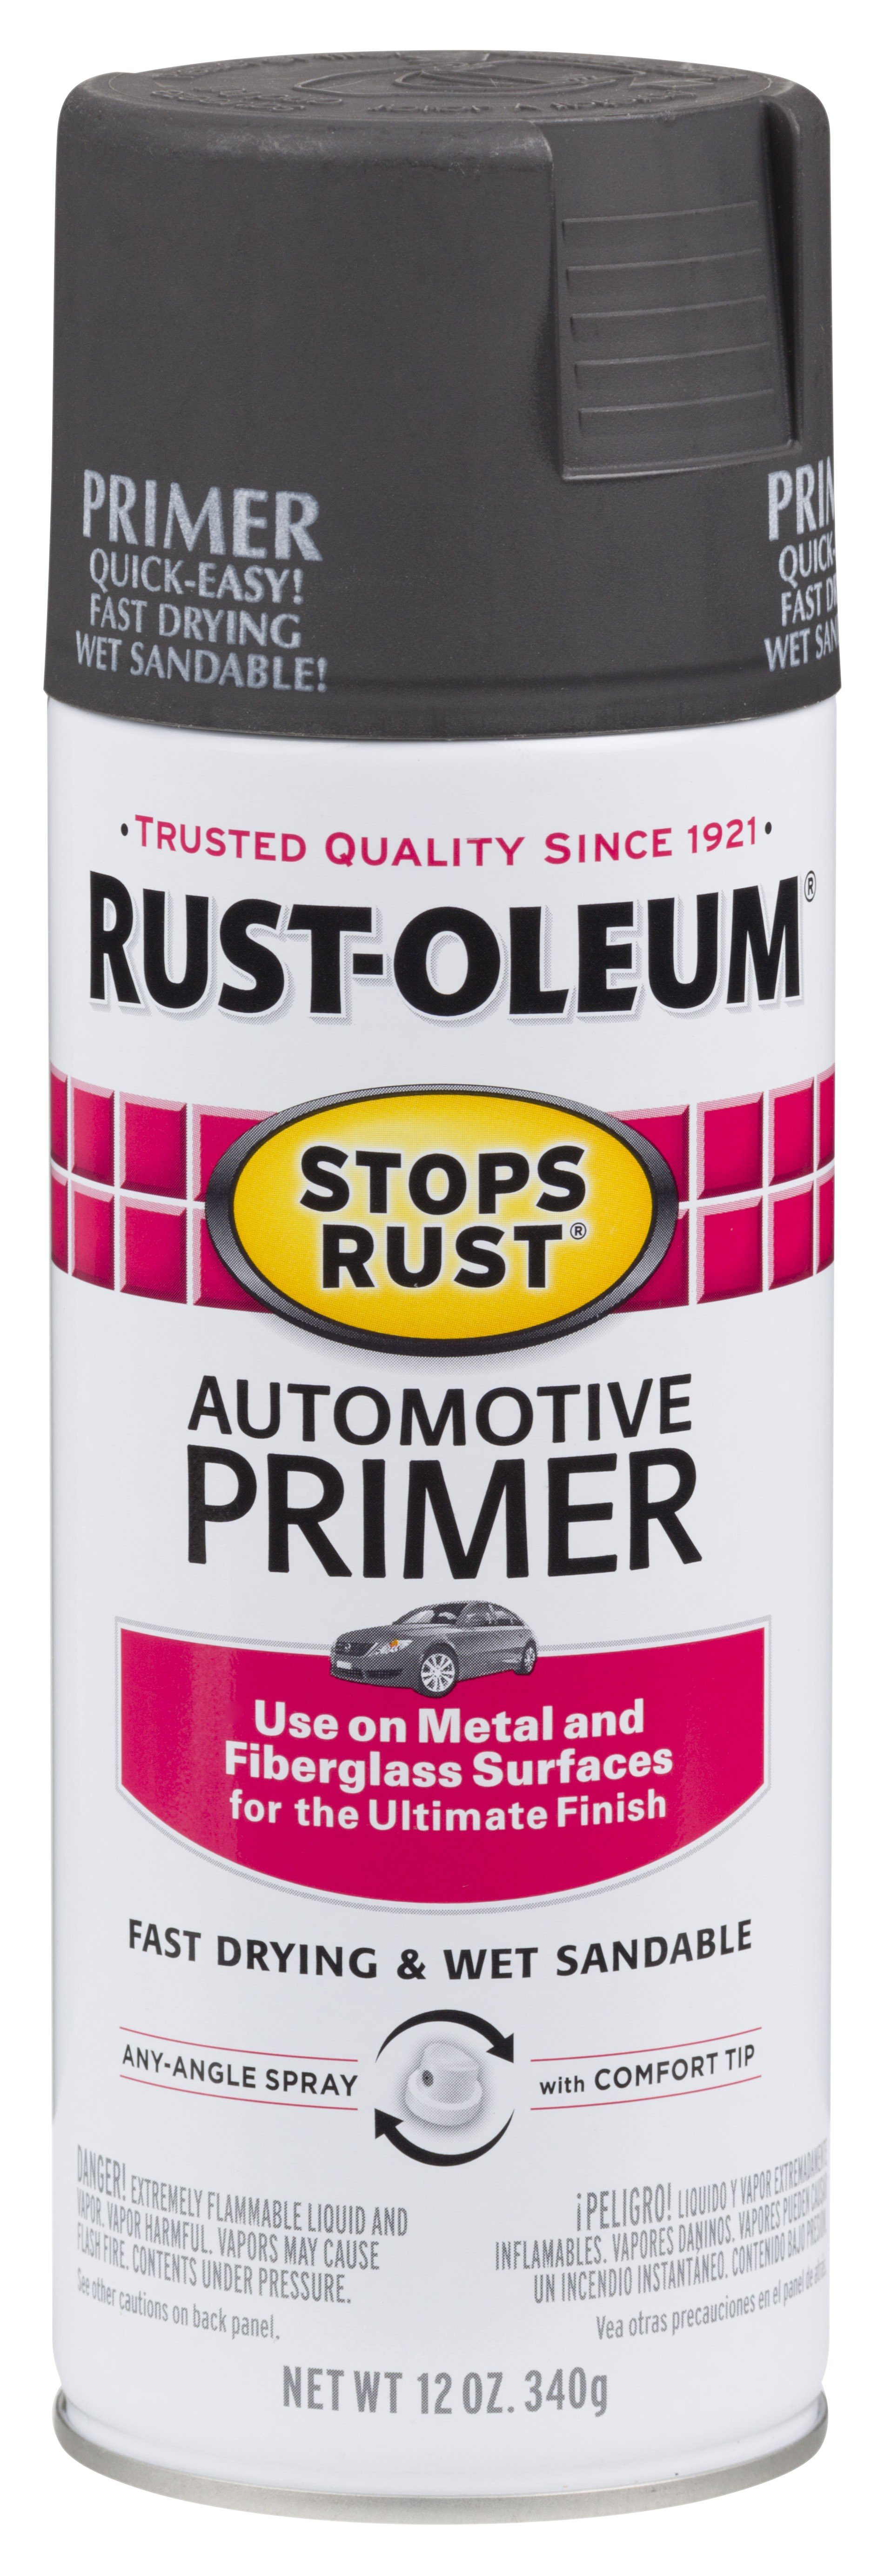 Rust-Oleum Stops Rust Auto Primer Spray Dark Grey - 2089830